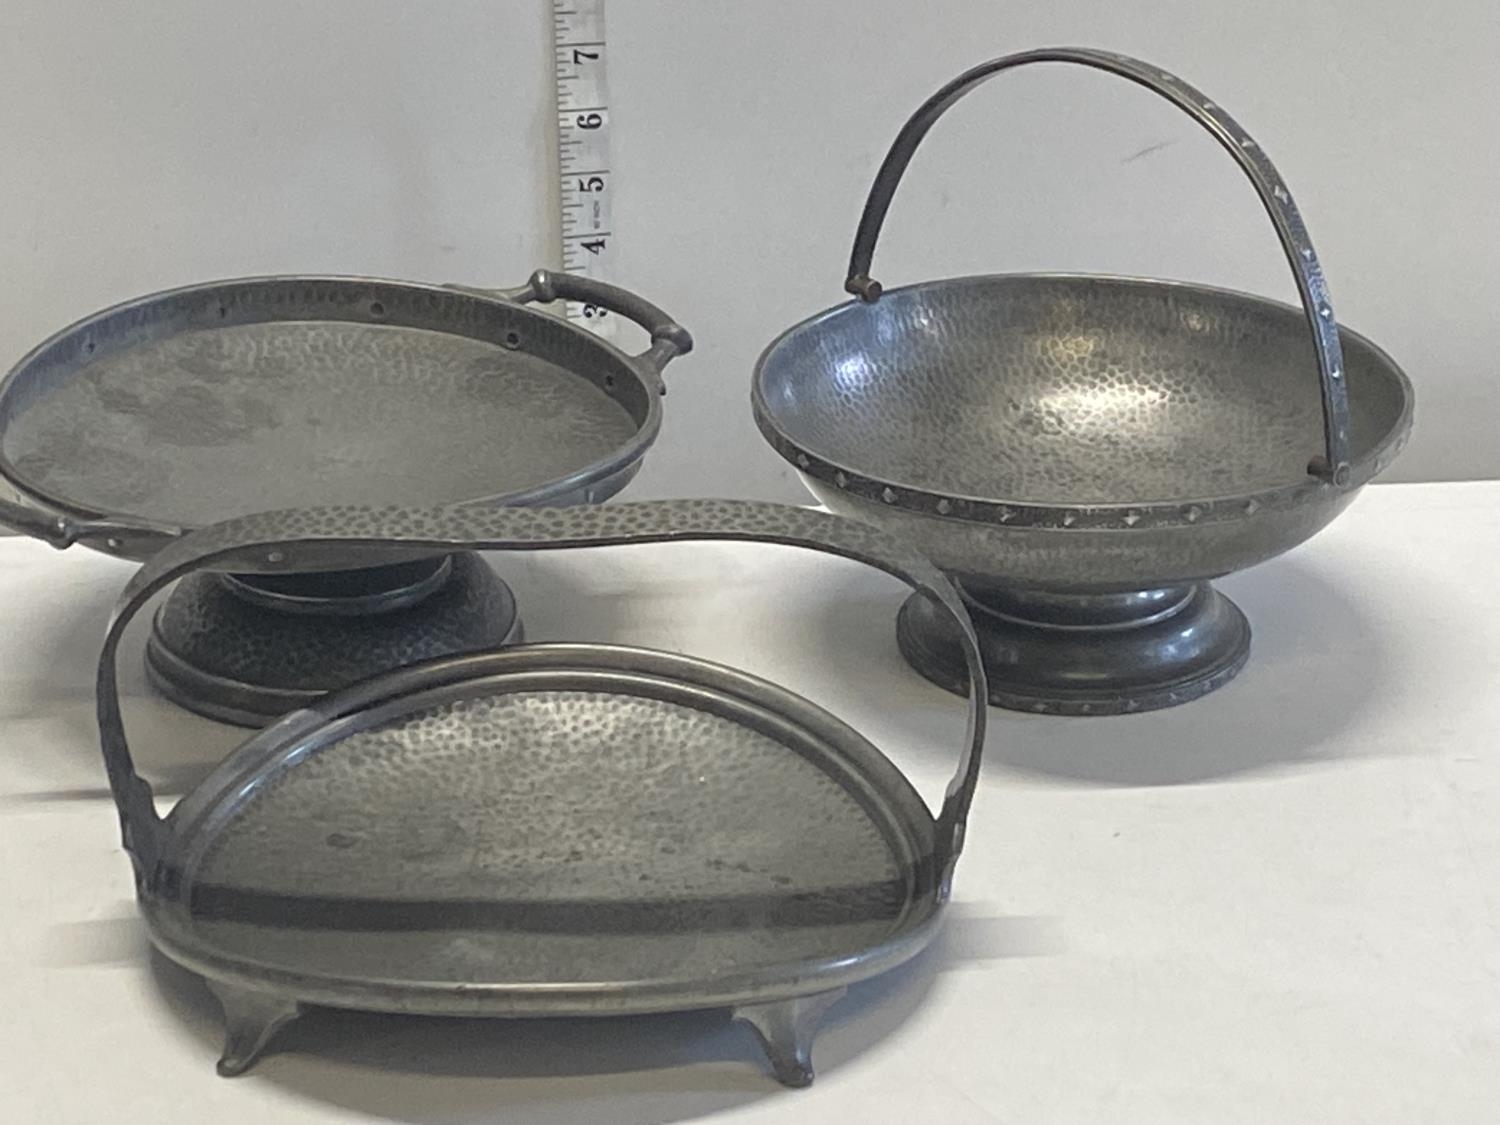 Three pewter bowls (a/f)